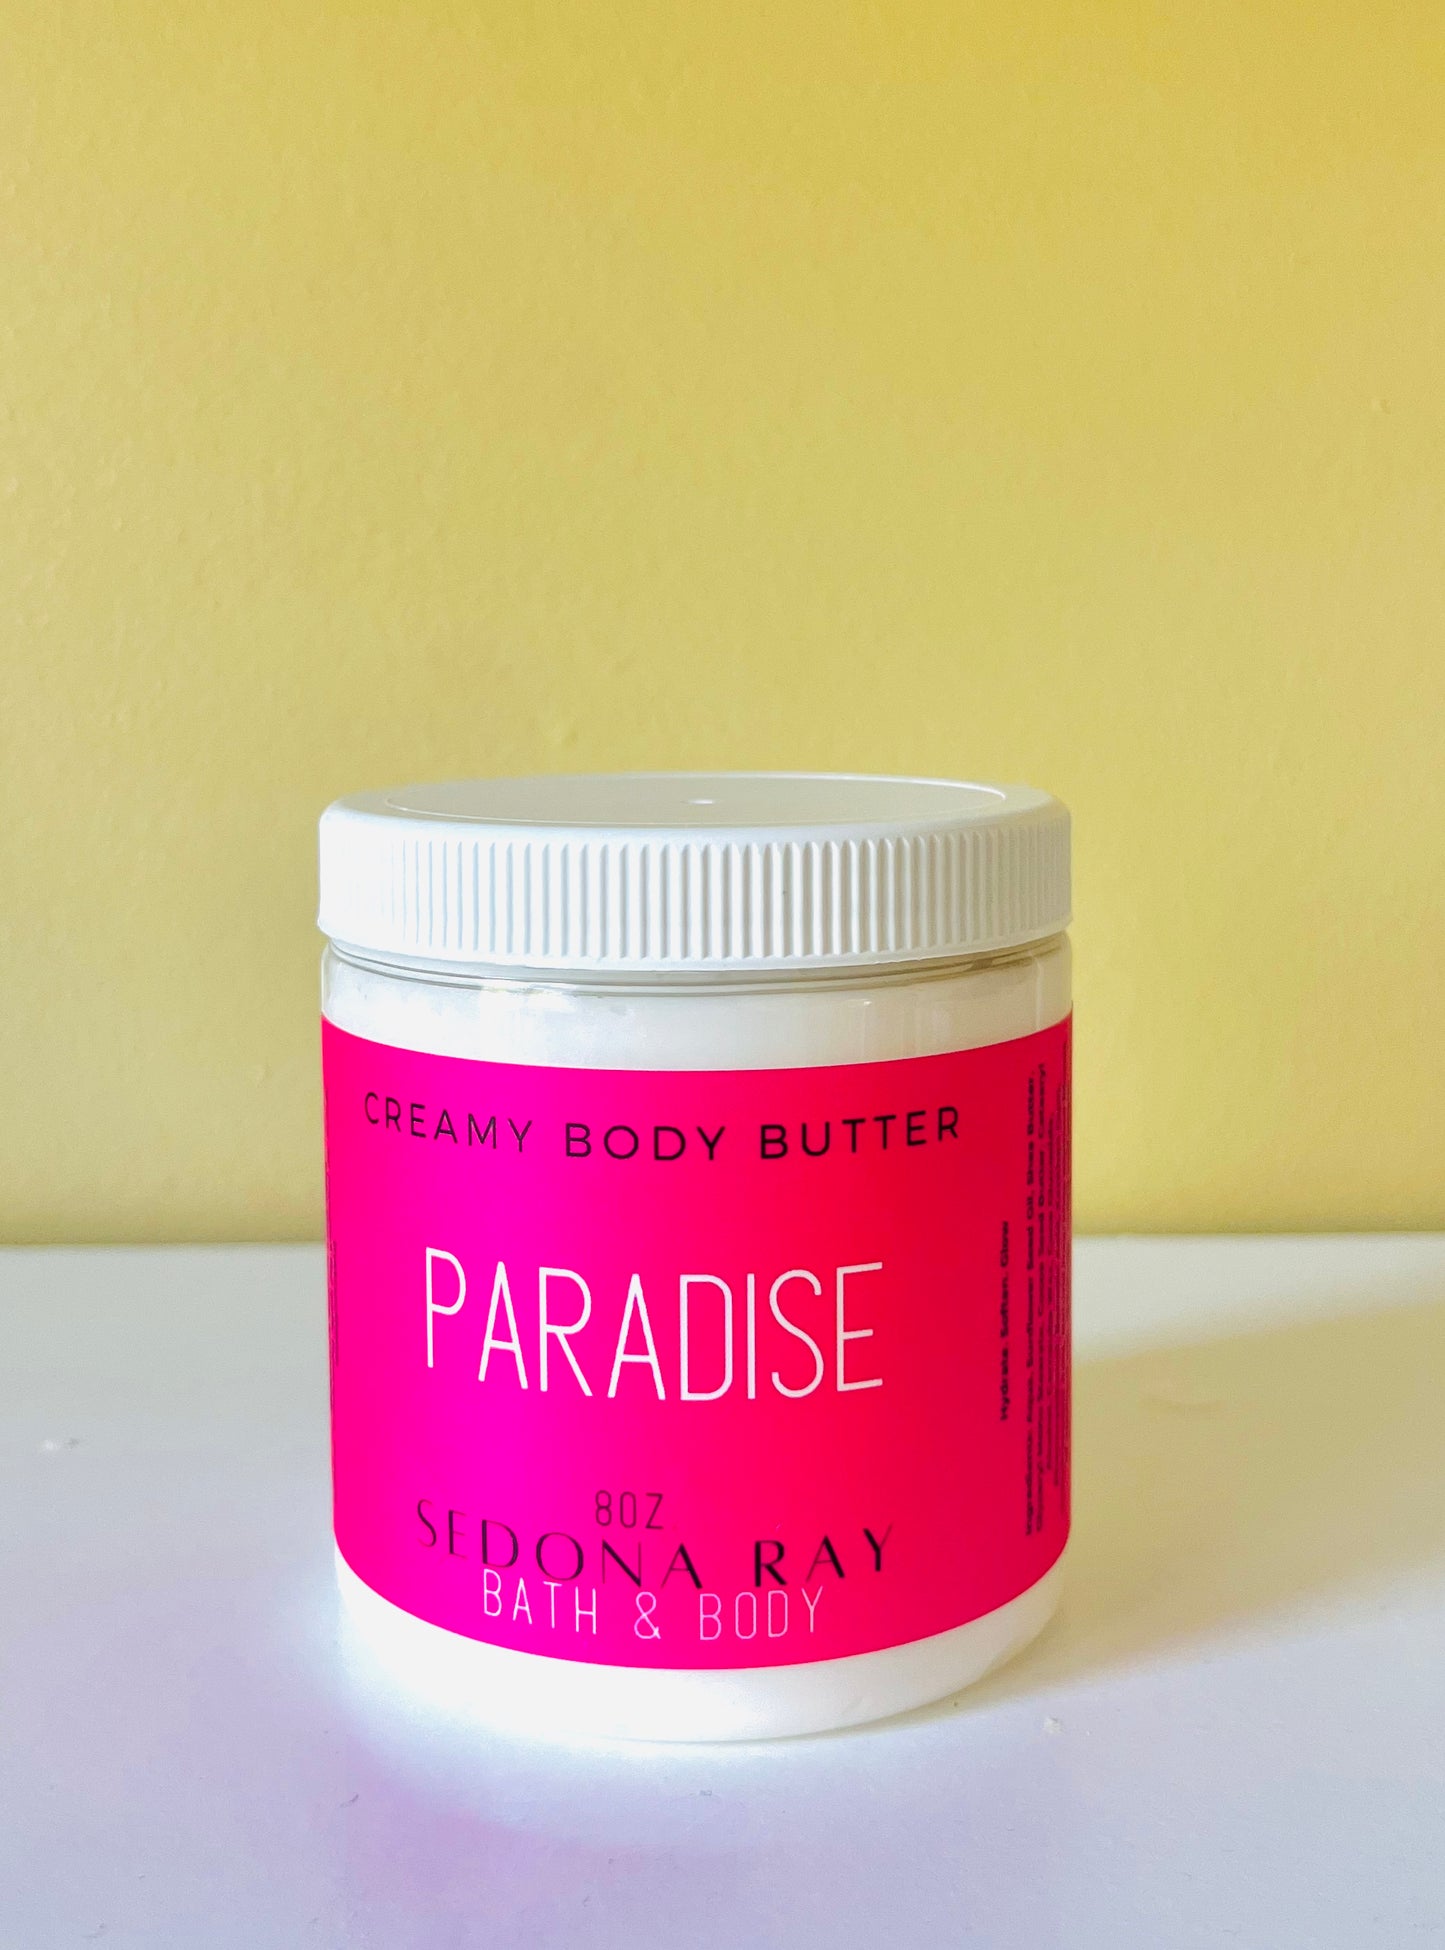 Paradise Creamy Body Butter